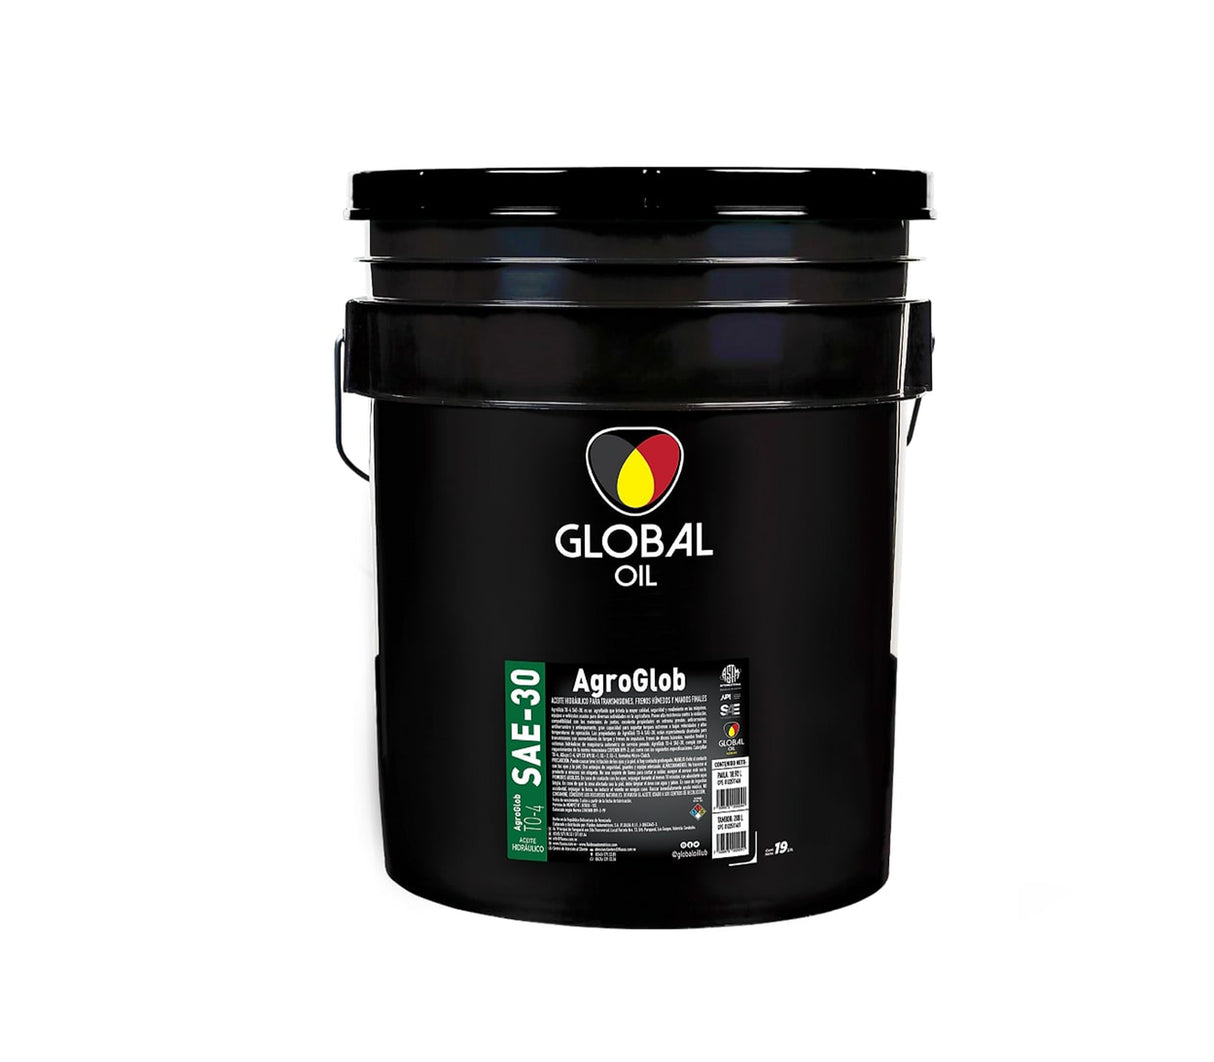 Aceite Agroglob SAE 10W-30 Paila Global Oil